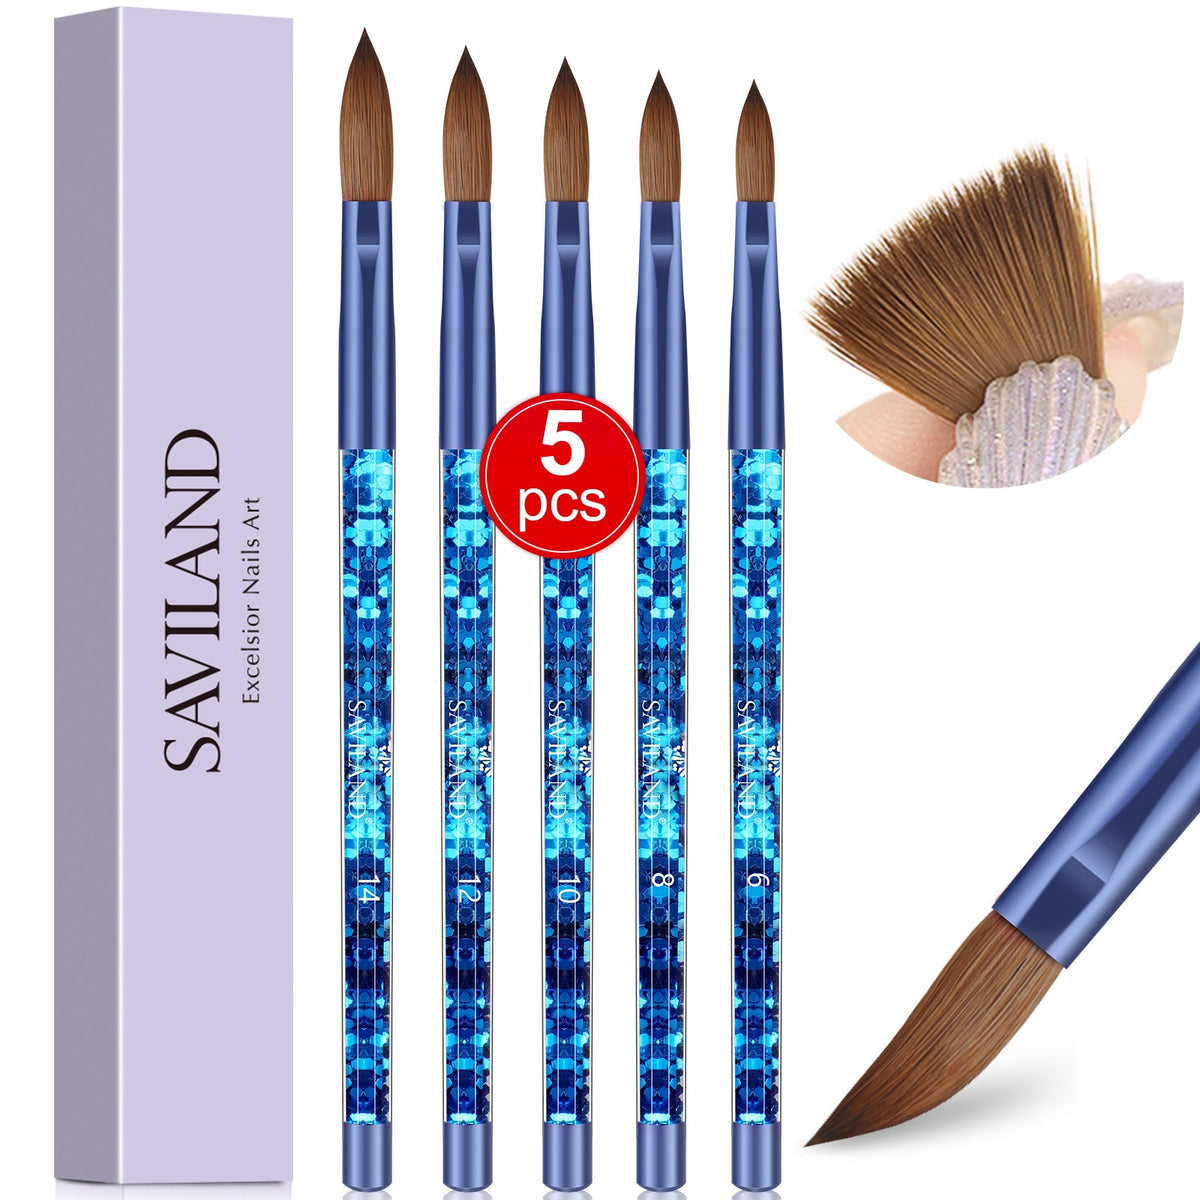 Saviland 6pcs Acrylic Nail Brushes Set - Profession Nail Art Brush for Acrylic Powder Application (Size #4#6#8#10#12#14), Size: 4/6/8/10/12/14, Brown